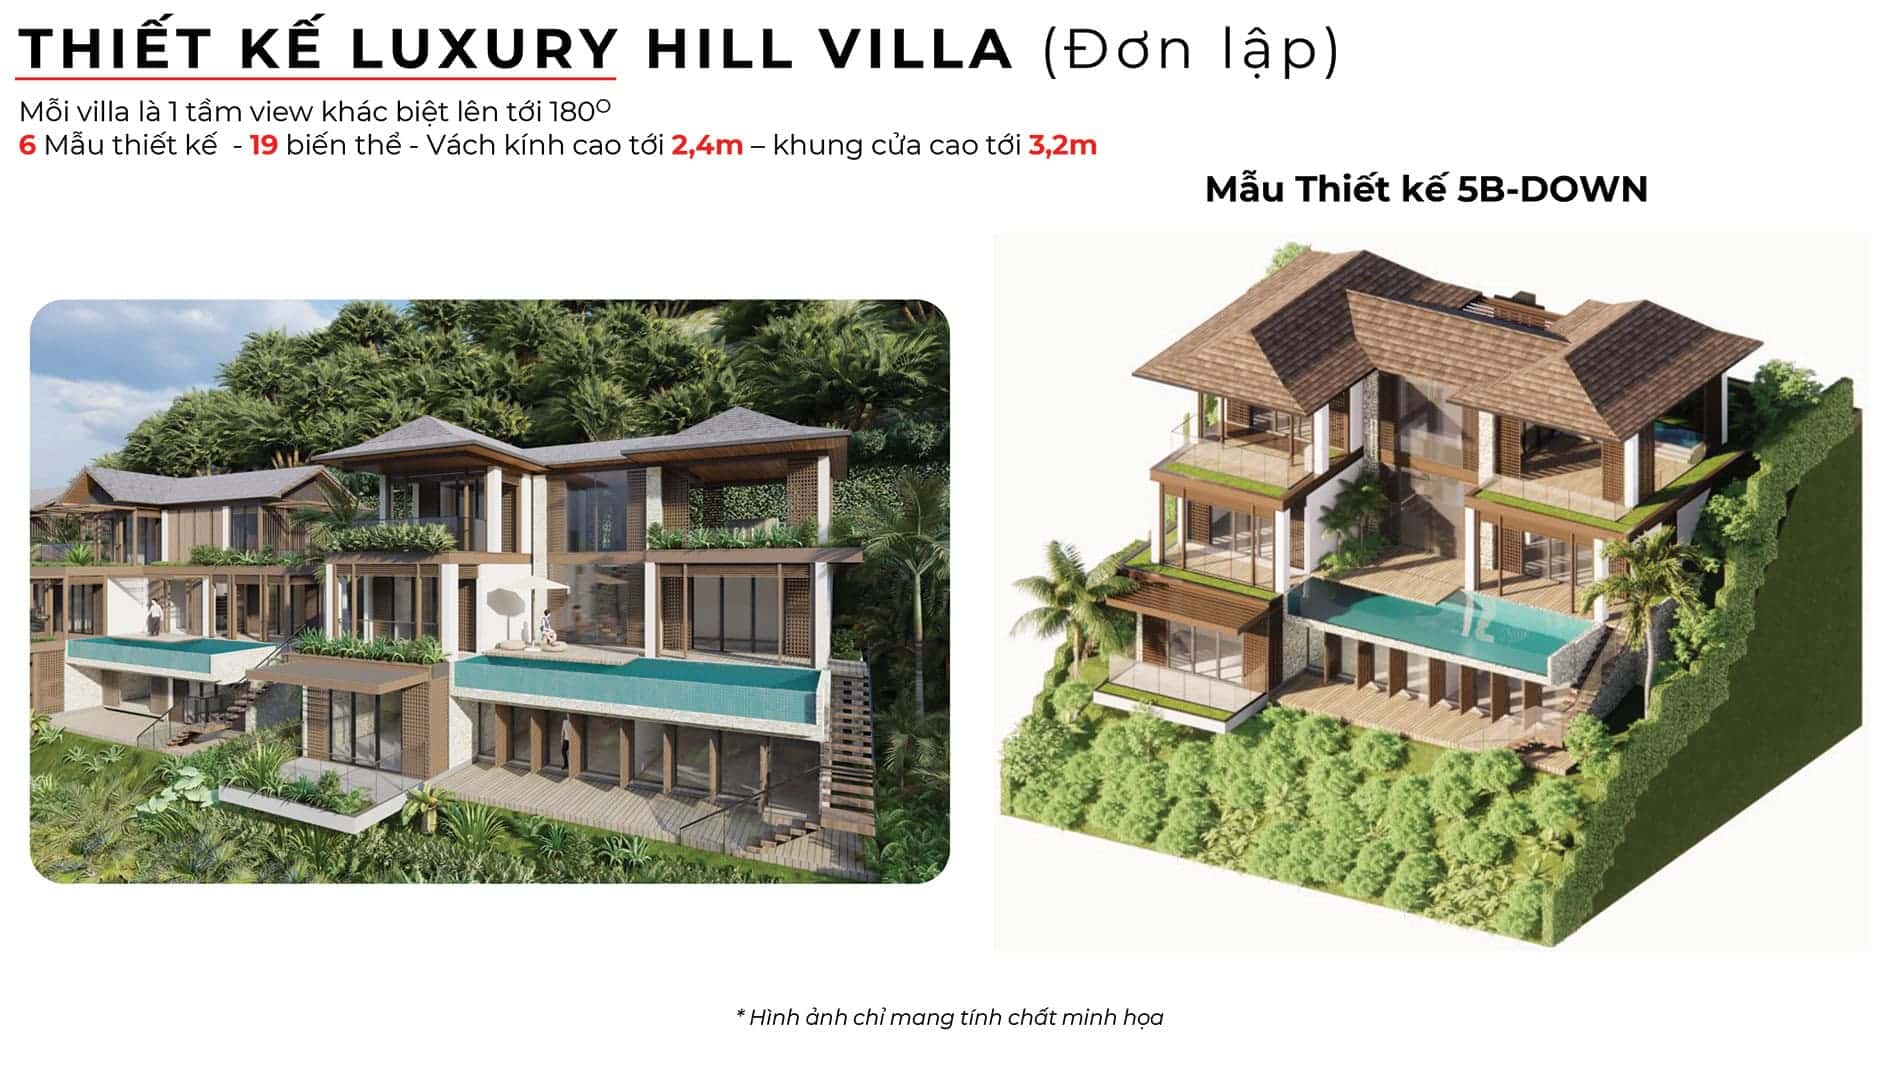 Mẫu thiết kế biệt thự đợn lập Luxury Hill Villa 5B-Down.